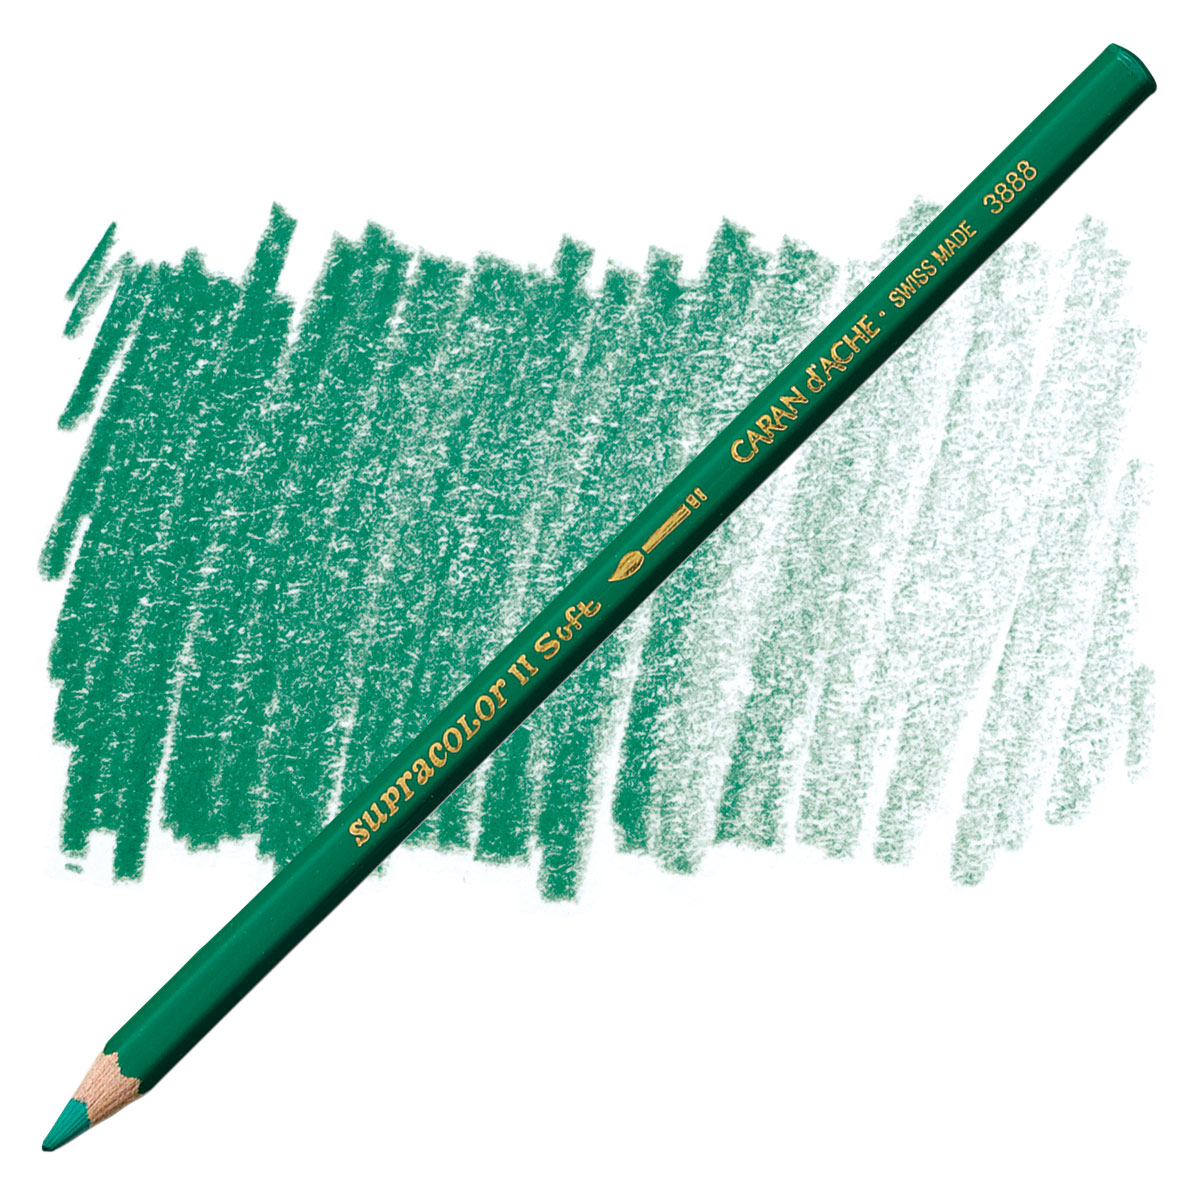 Caran dAche Supracolor Soft Aquarelle Pencil Sets